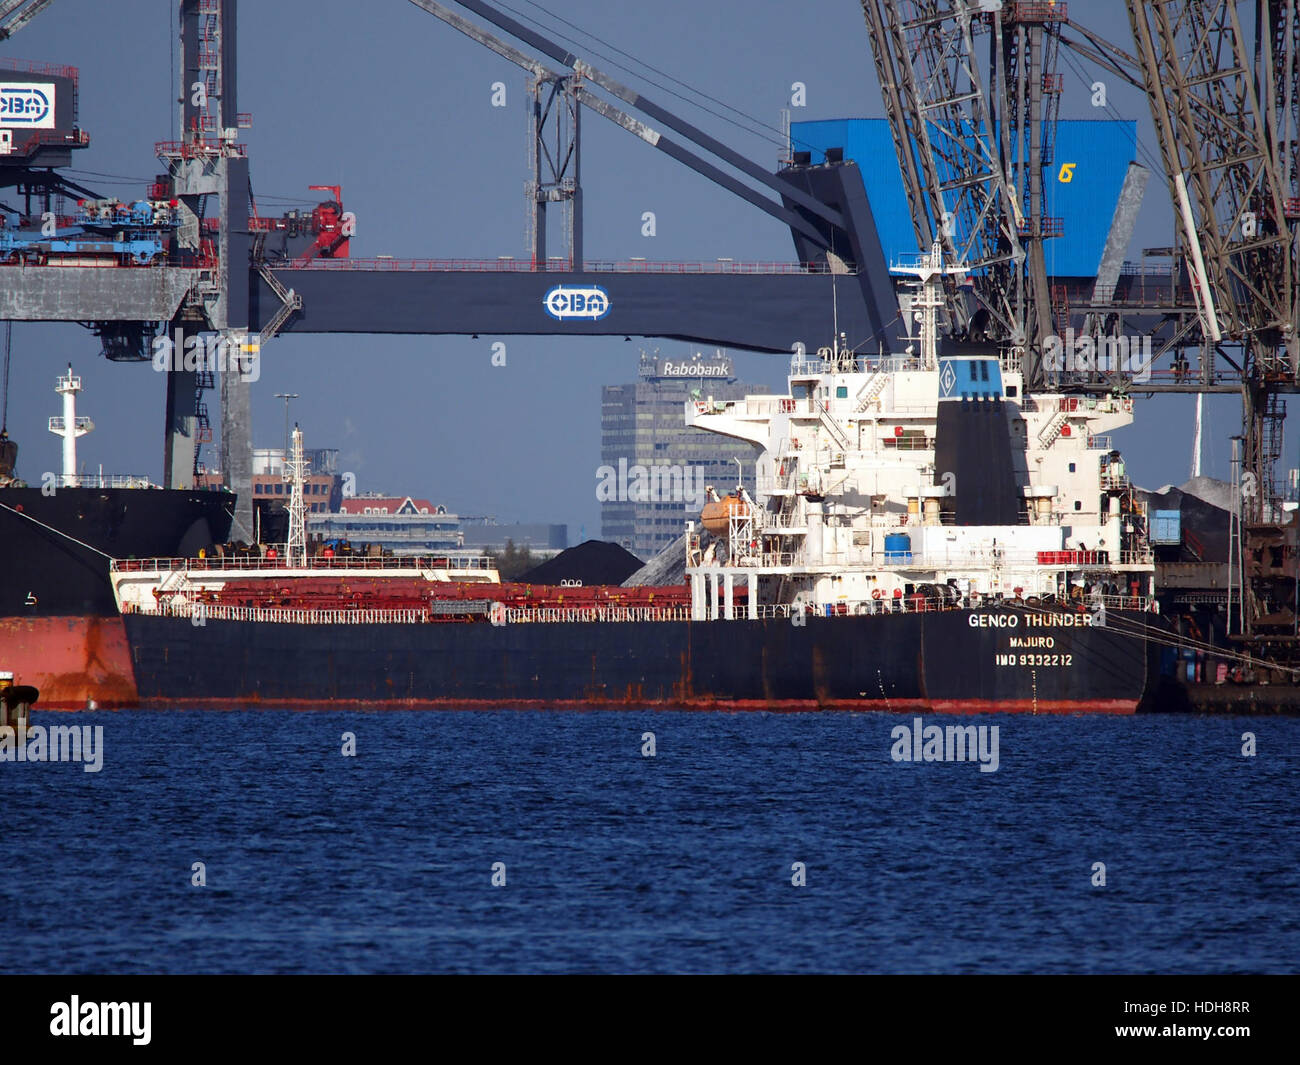 Genco Thunder (2007), navire IMO 9332212 - Indicatif d'APPEL V7LZ4 Port d'Amsterdam Banque D'Images